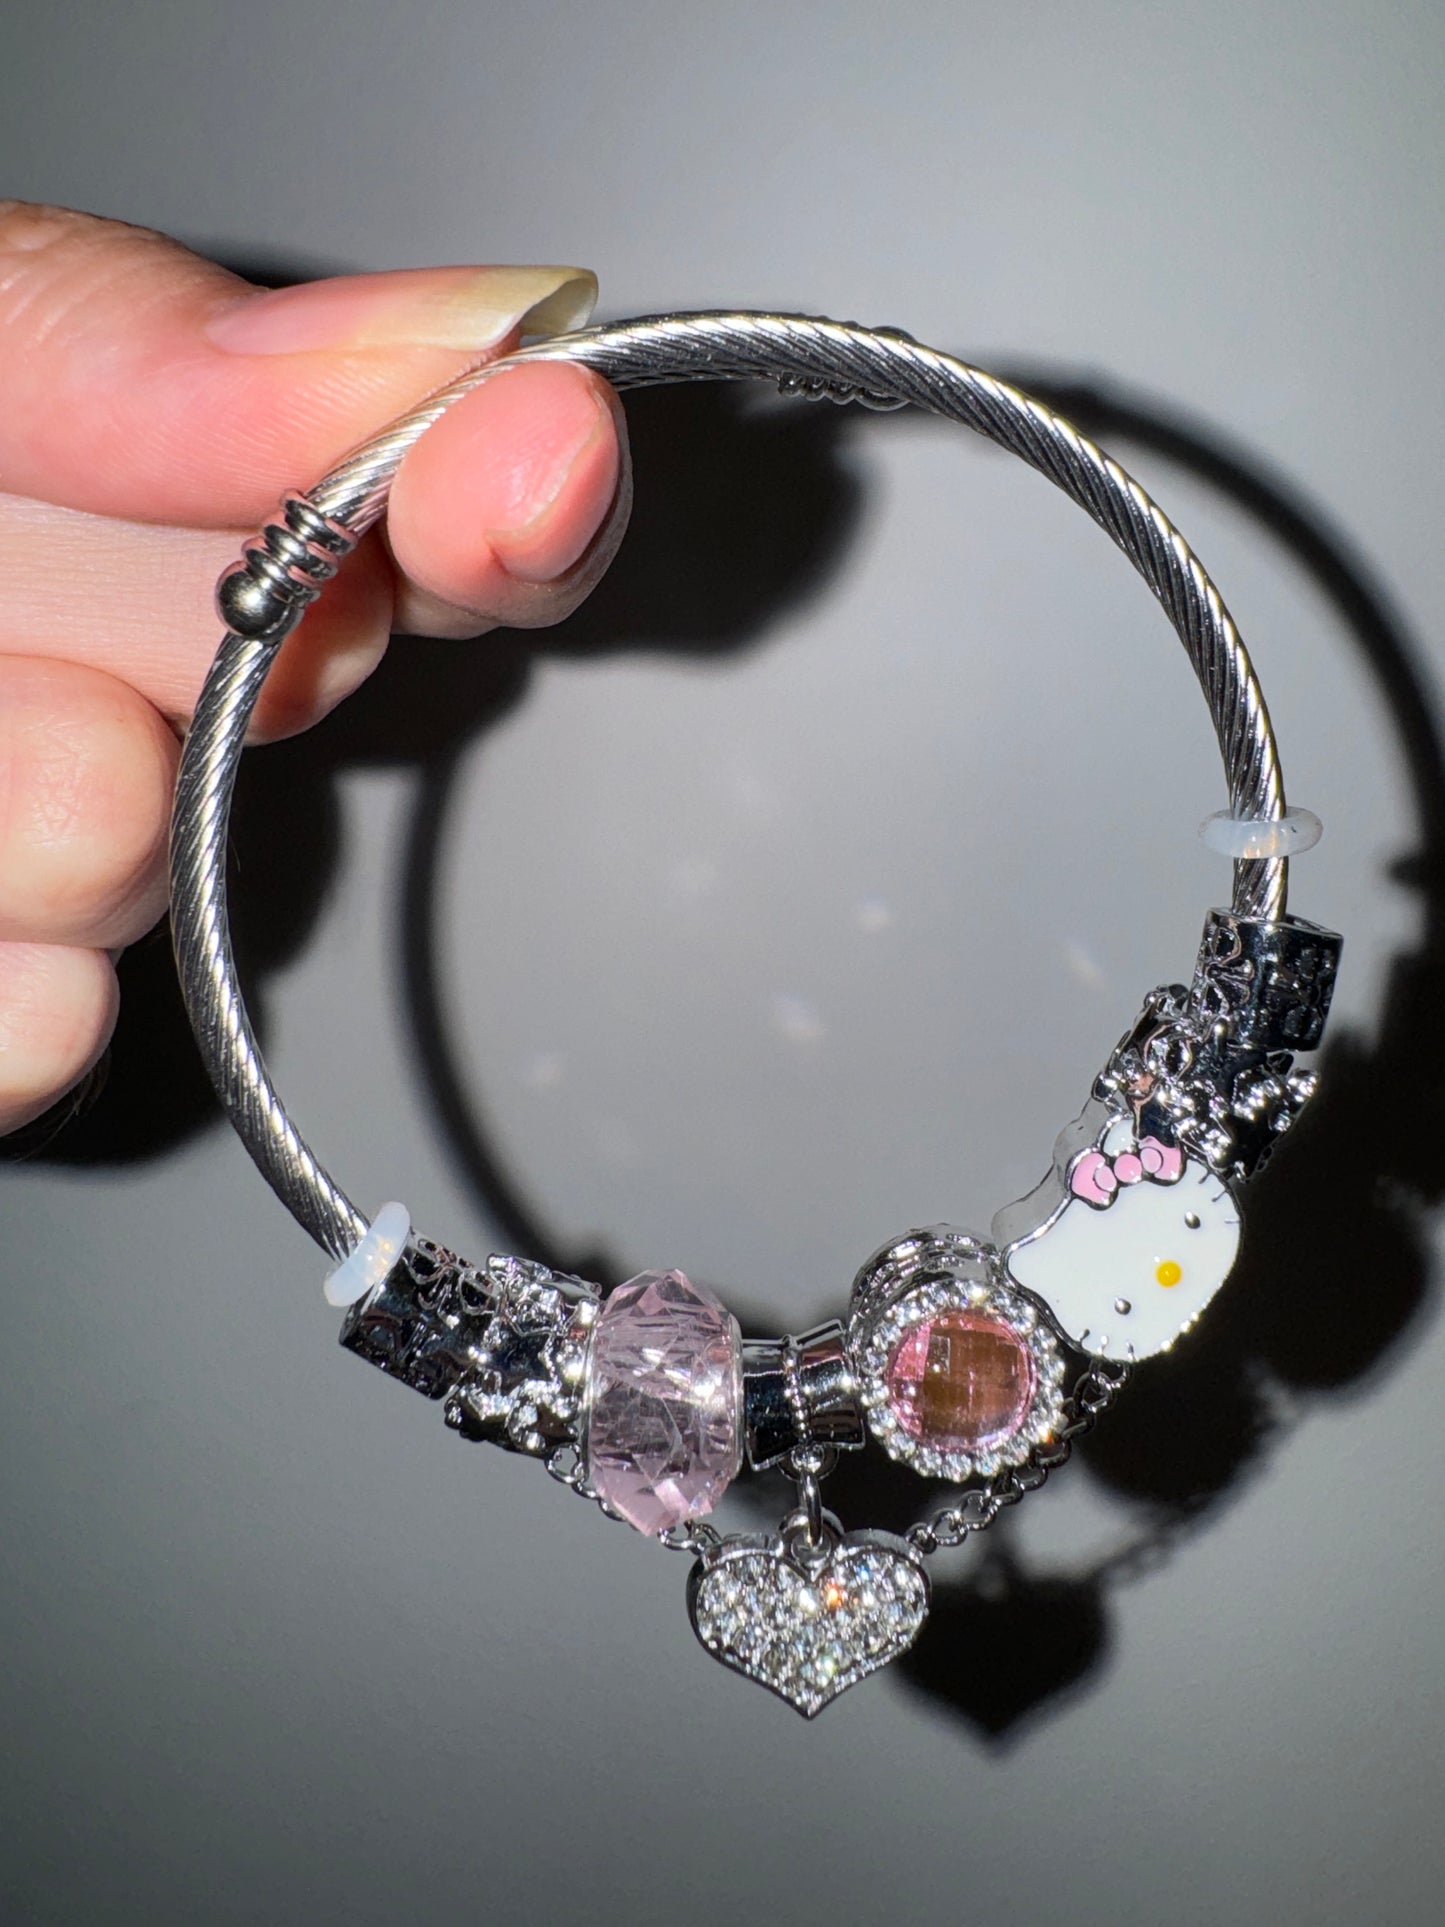 Hellokitty Pandora Charm Bracelets Stainless Steel Bangle Bracelet Birthday Christmas Jewelry Gift for Women Girls